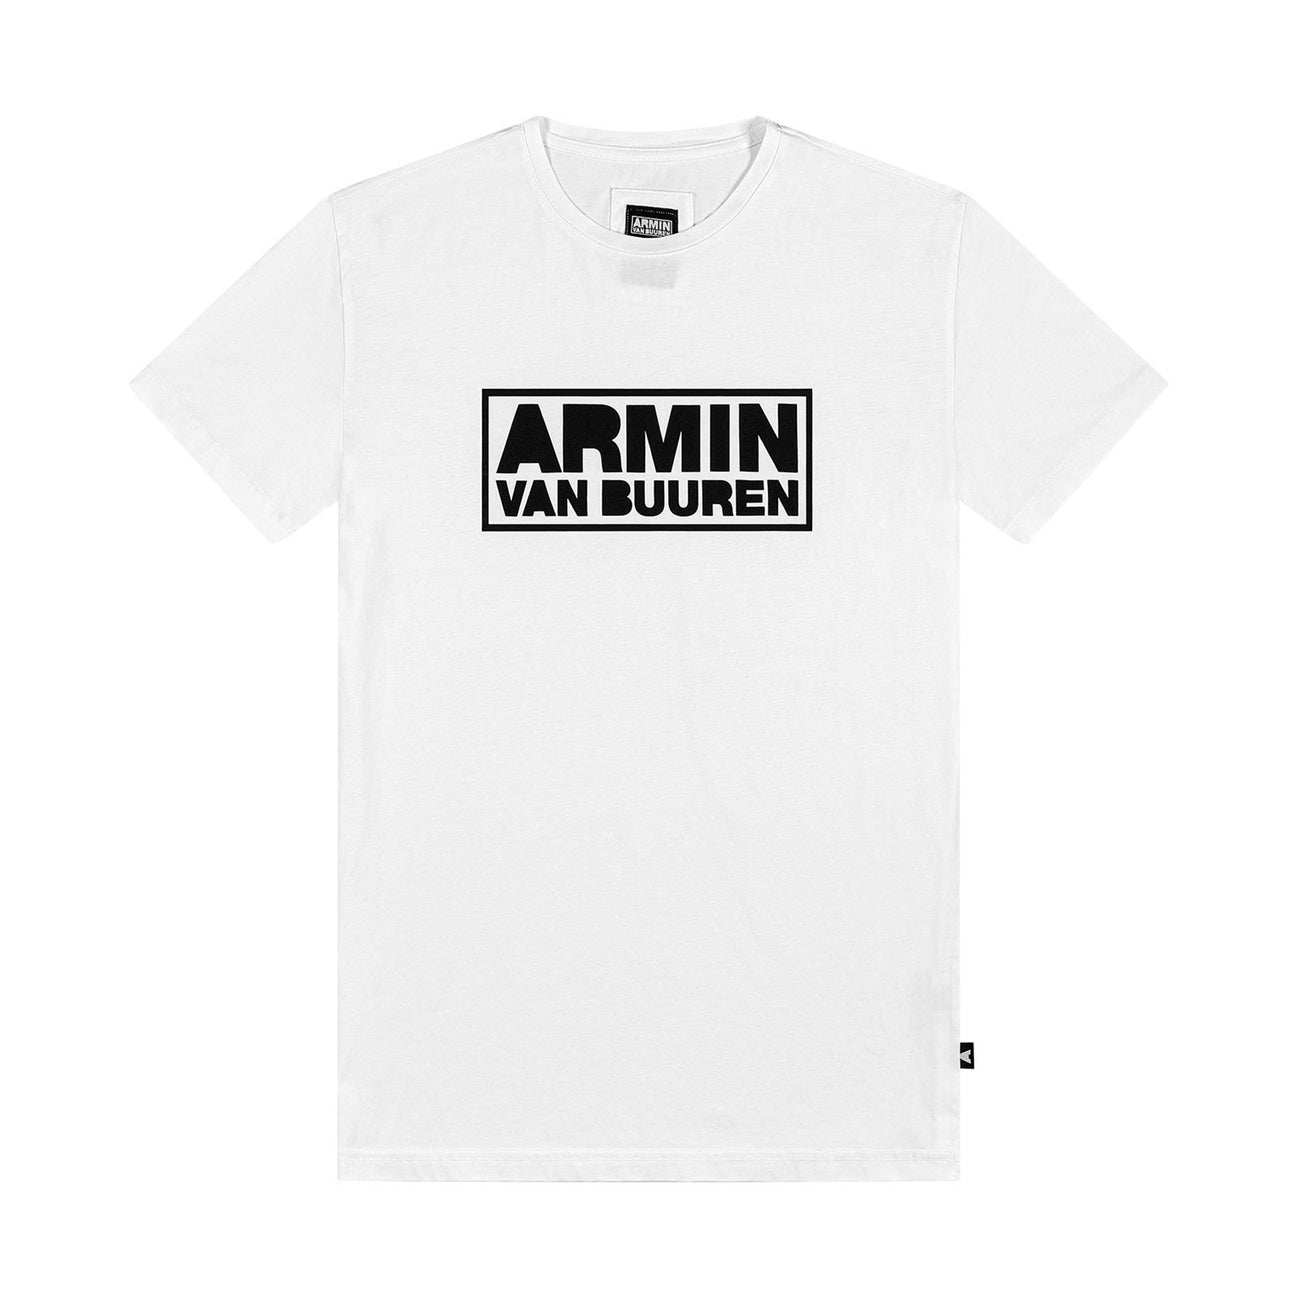 Armin van Buuren logo t-shirt white